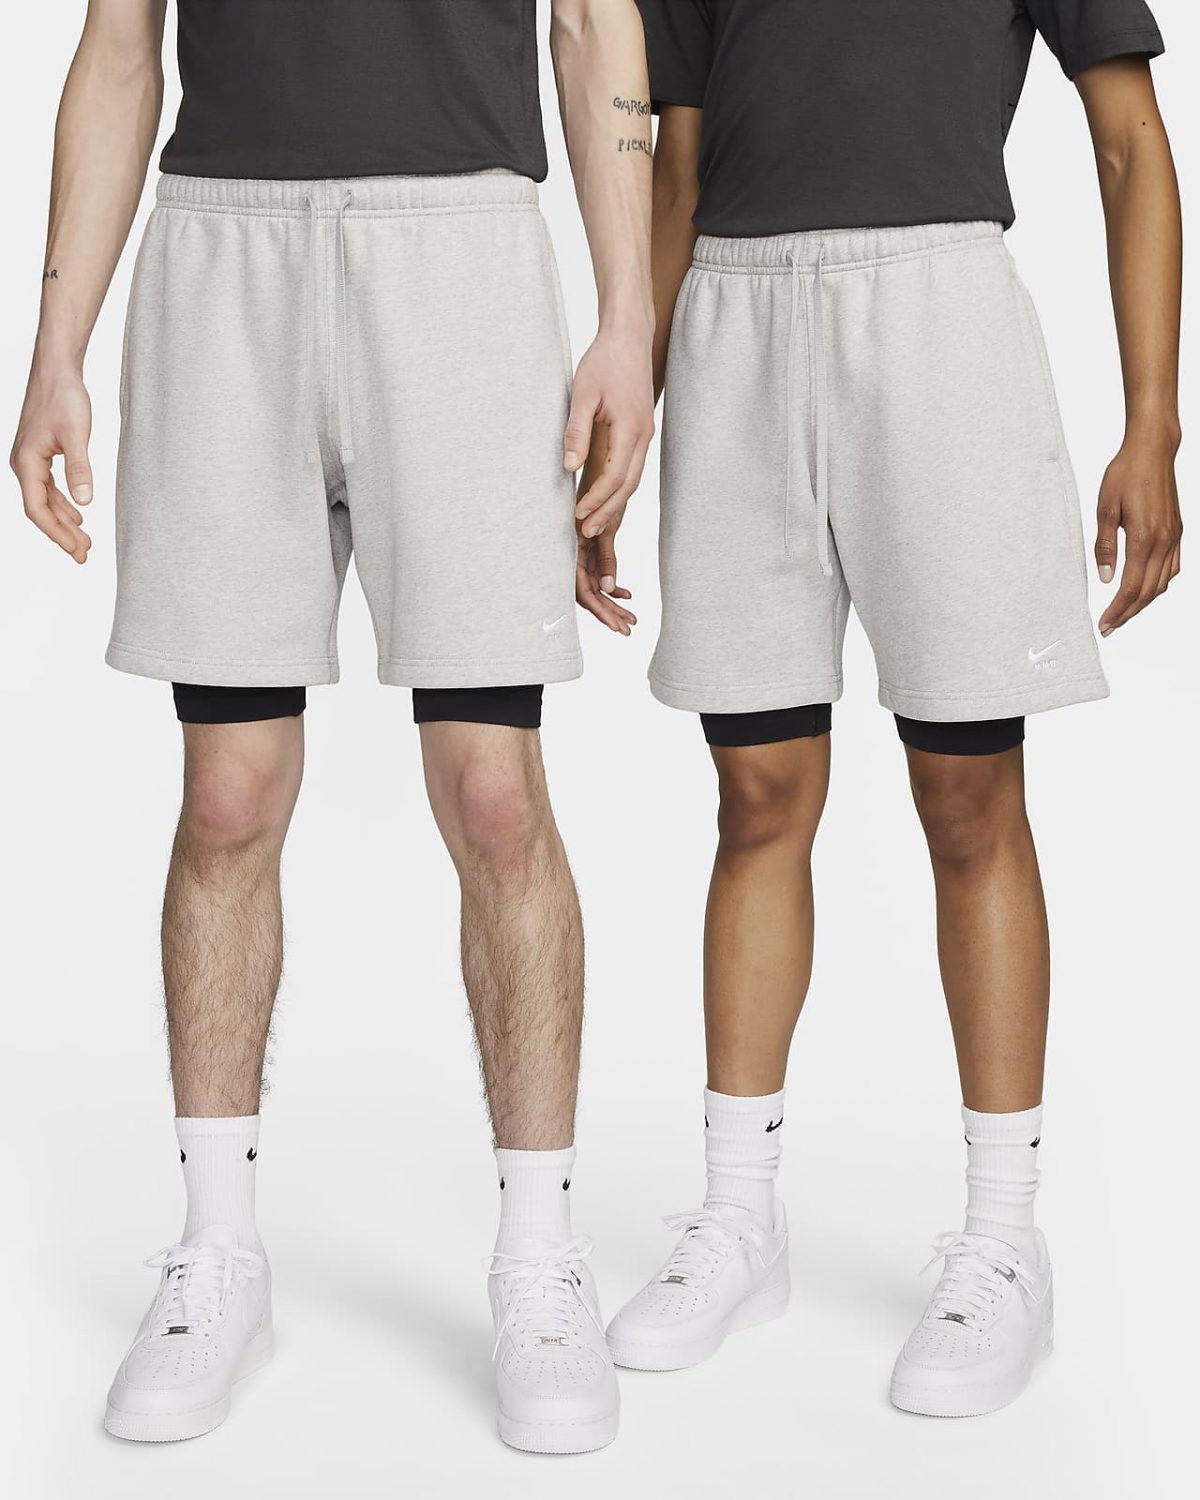 Мужские шорты Nike x MMW фото